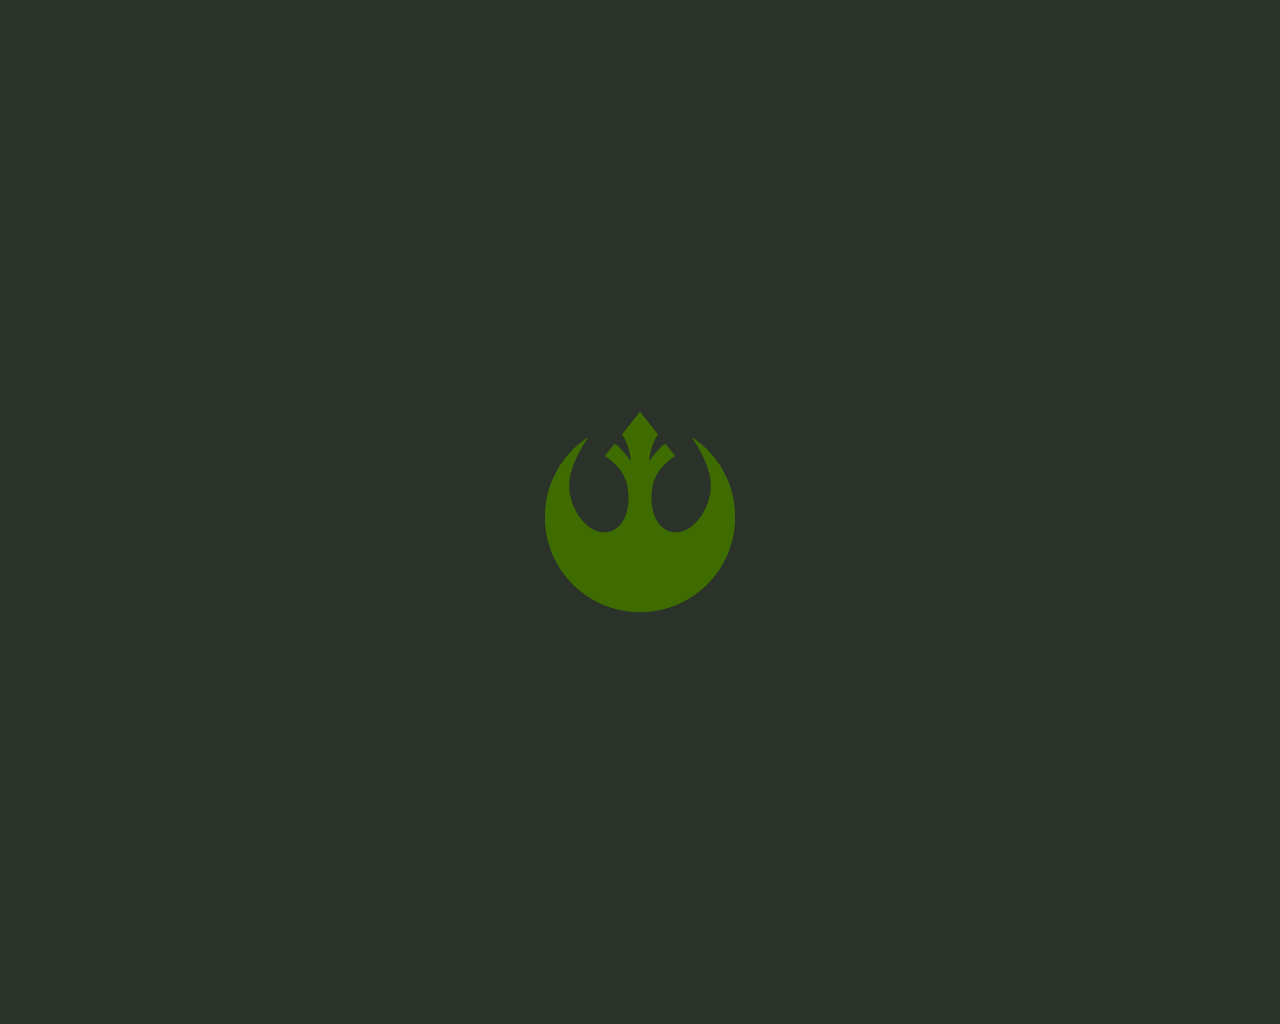 Star Wars Rebel Alliance Wallpaper By Diros